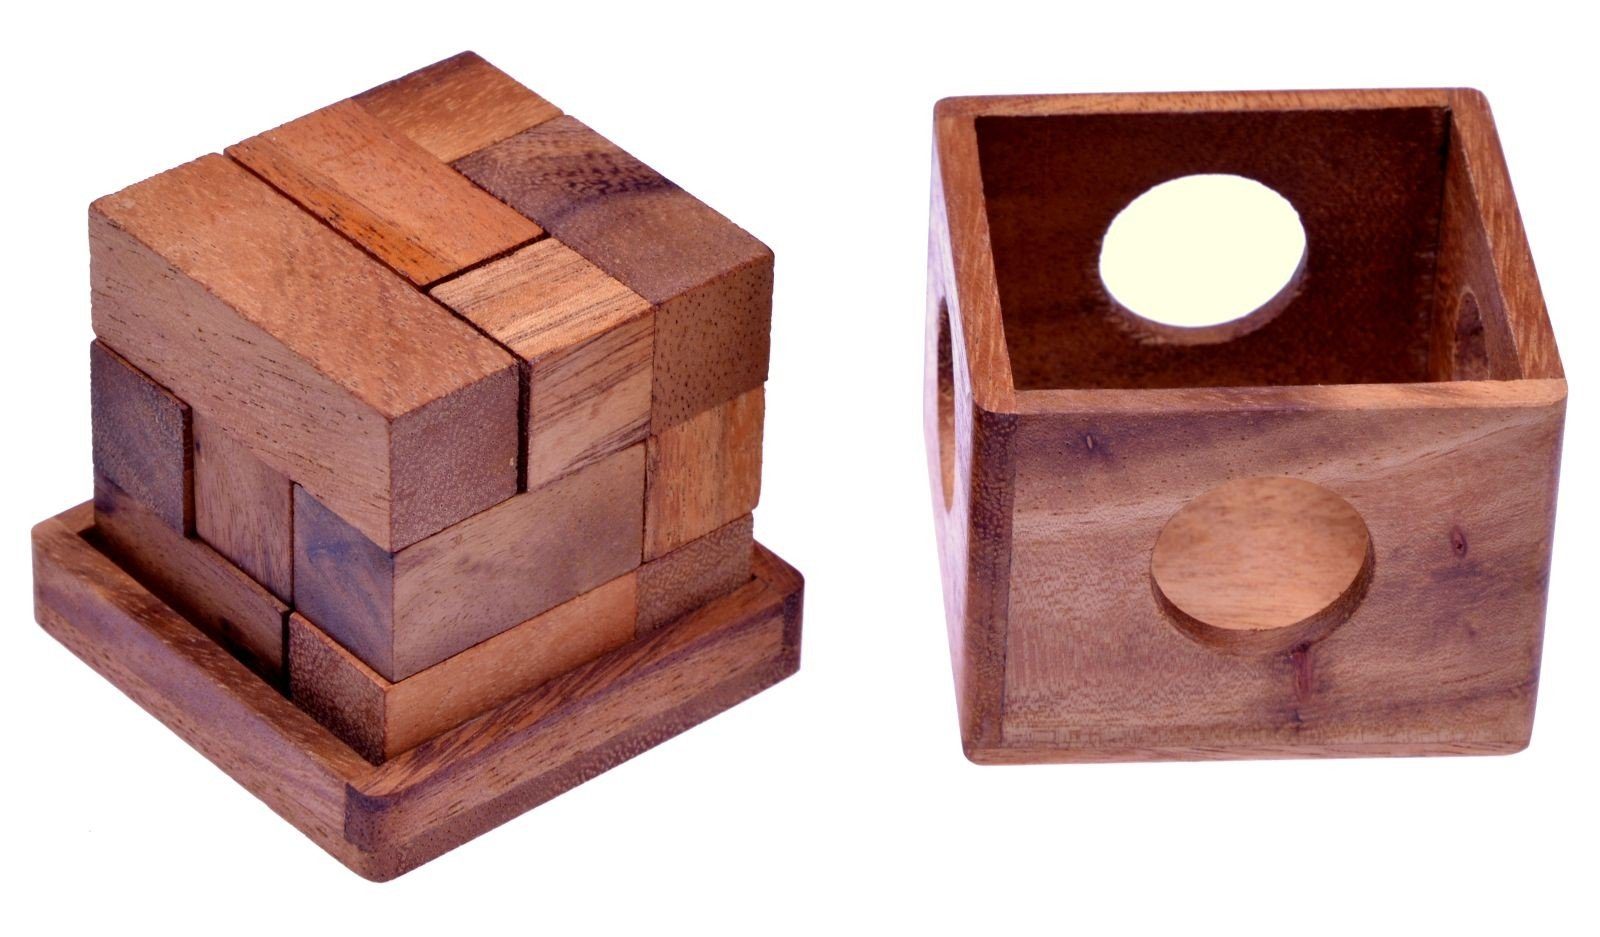 Gr. - Kantenlänge Puzzle L 3D - cm im Holzspiele Soma Würfel Knobelspiel HolzkastenHolzspielzeug - Logoplay 9 Spiel,